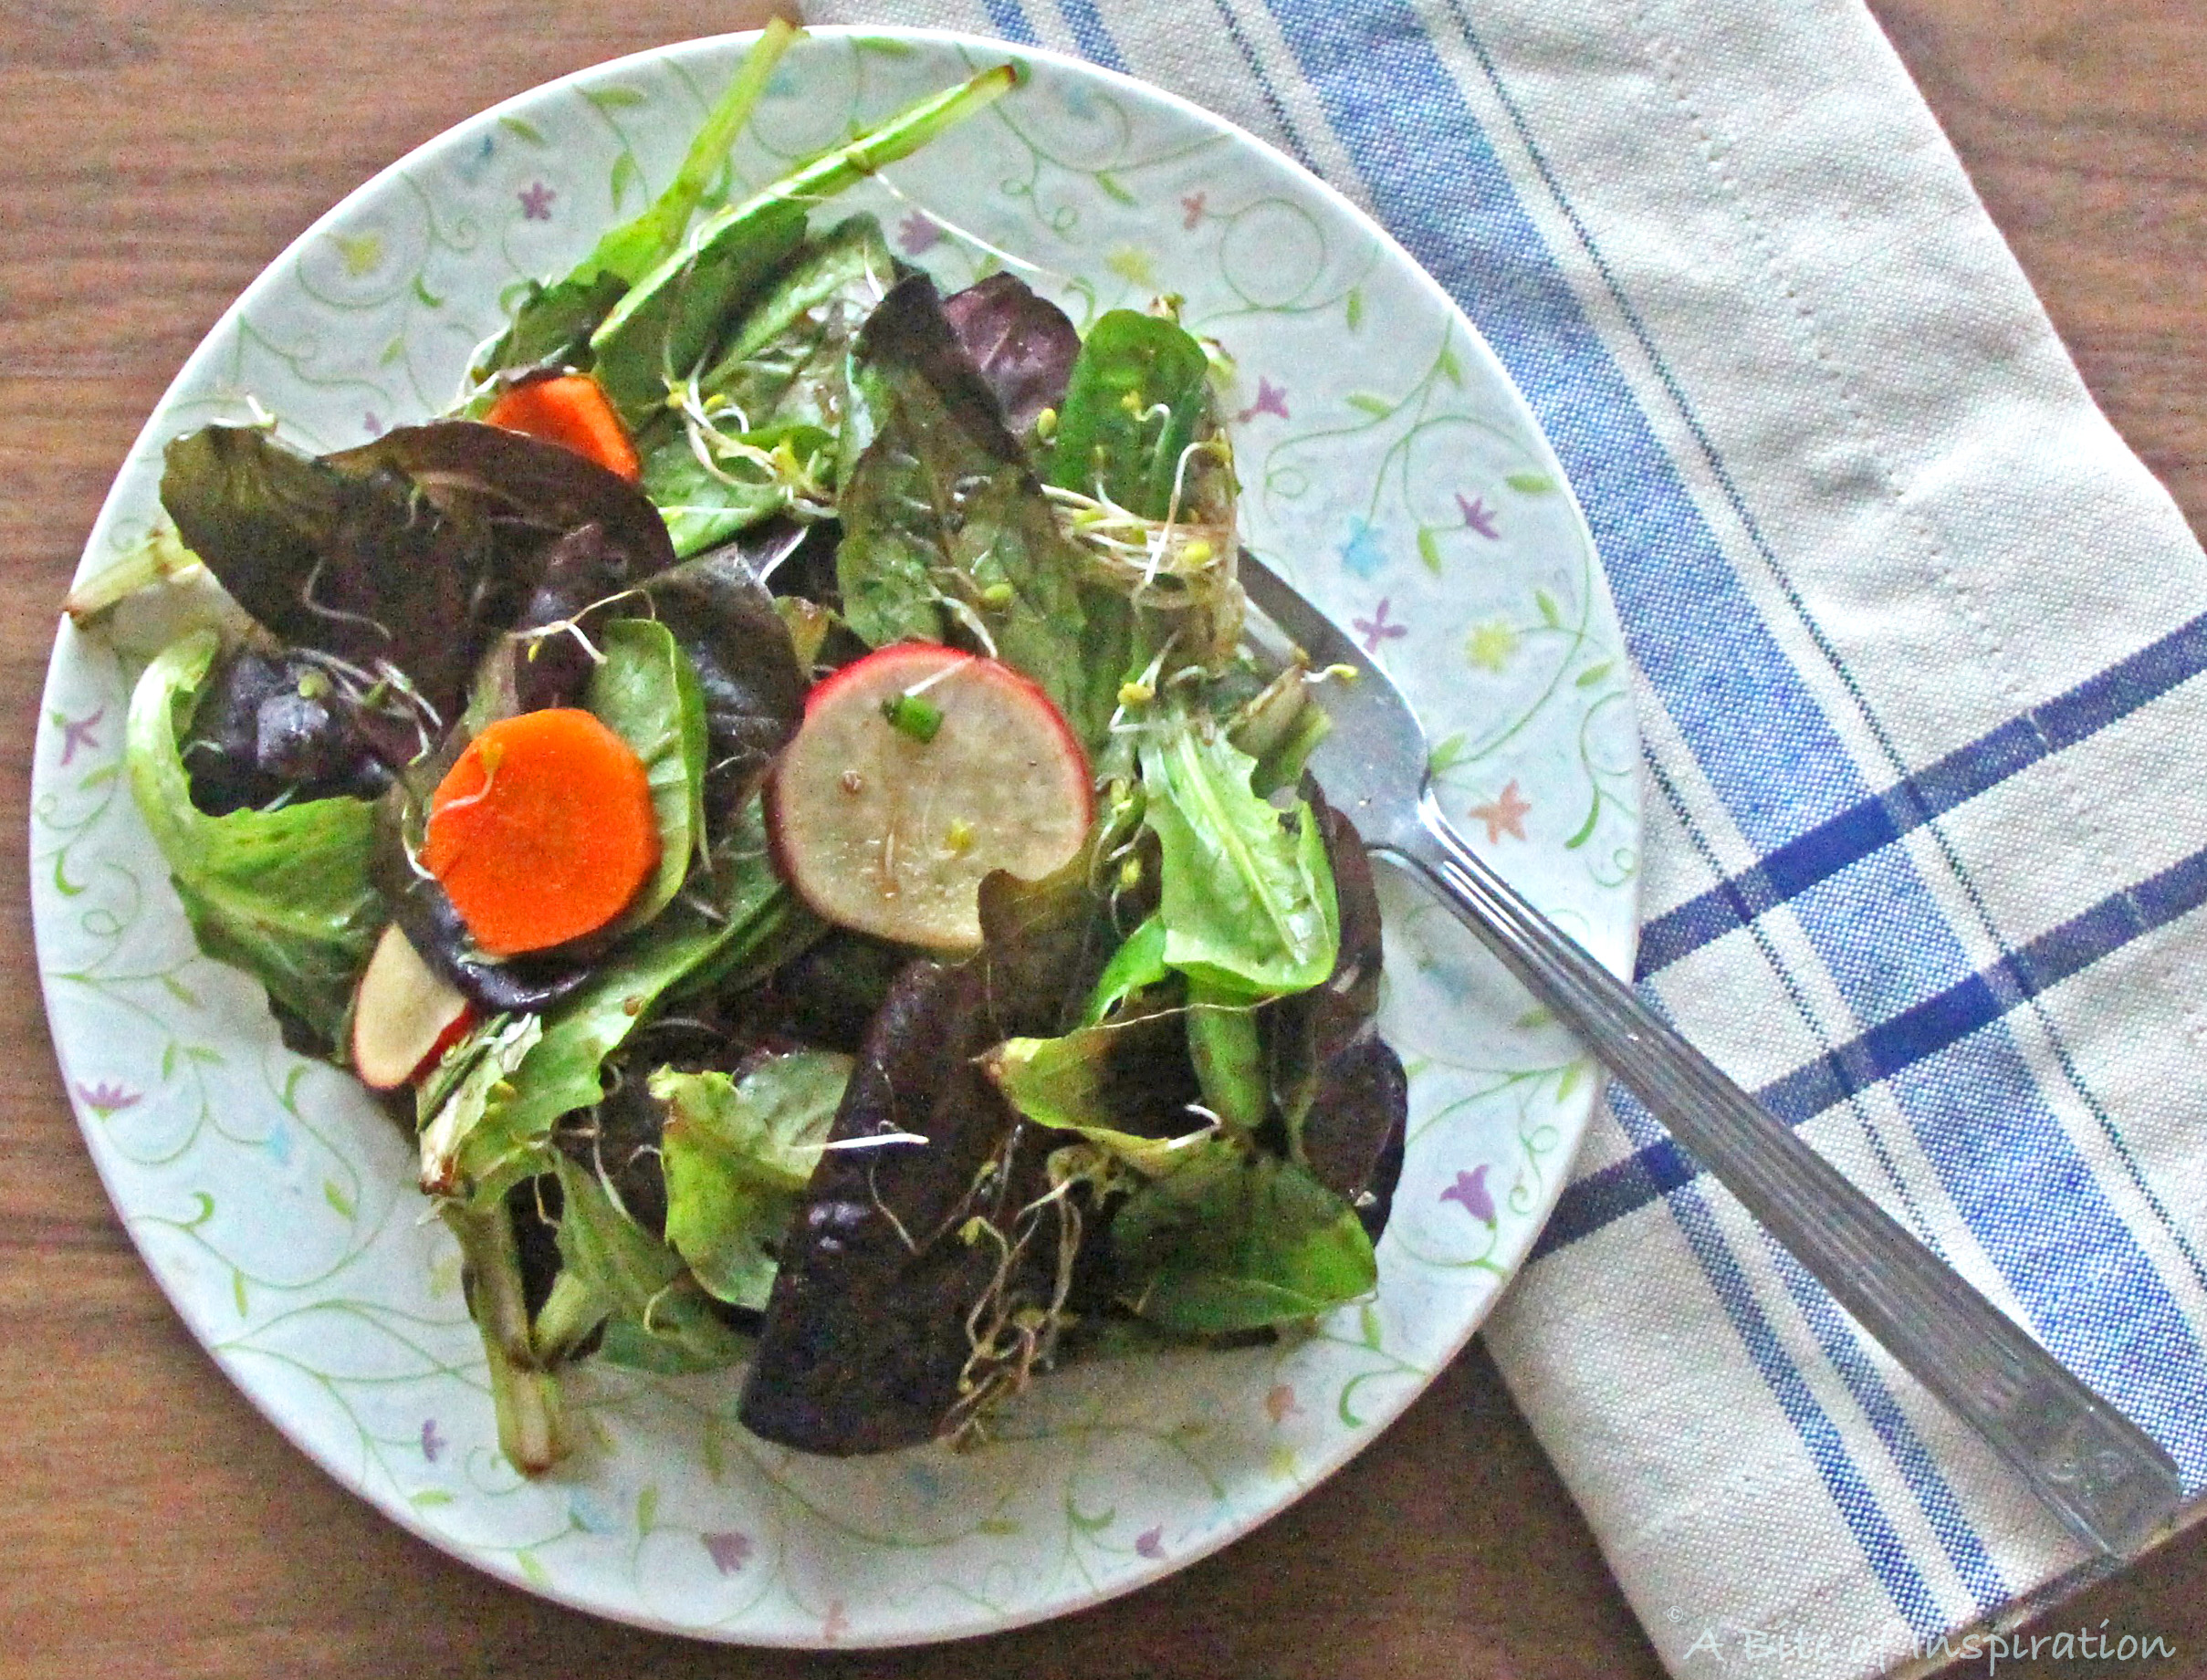 Healthiest Garden Salad A Bite Of Inspiration Food Blog